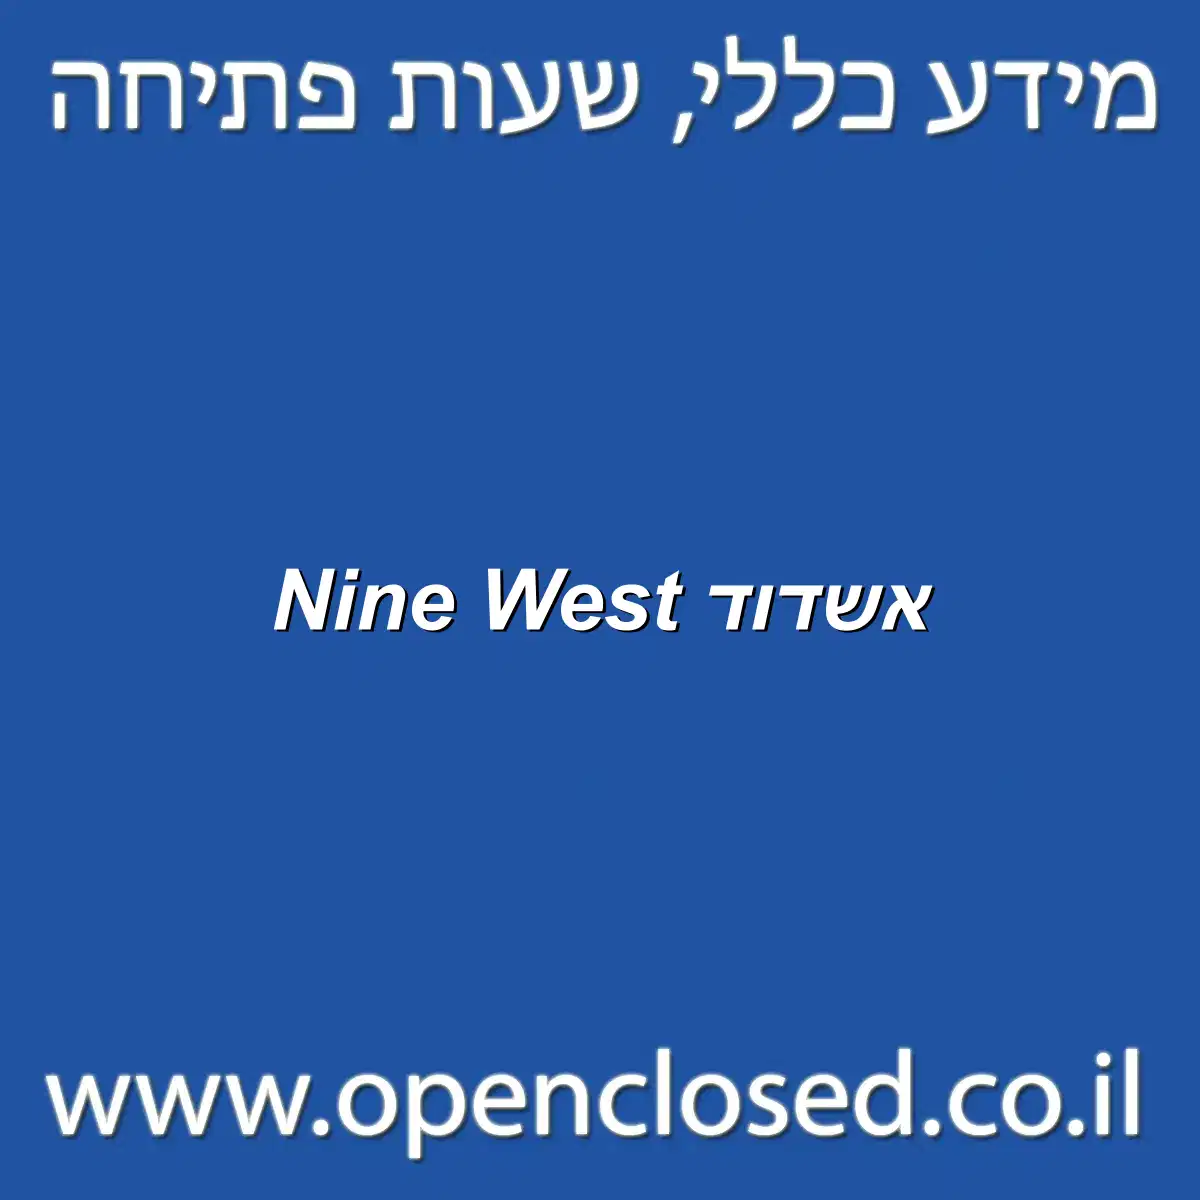 Nine West אשדוד